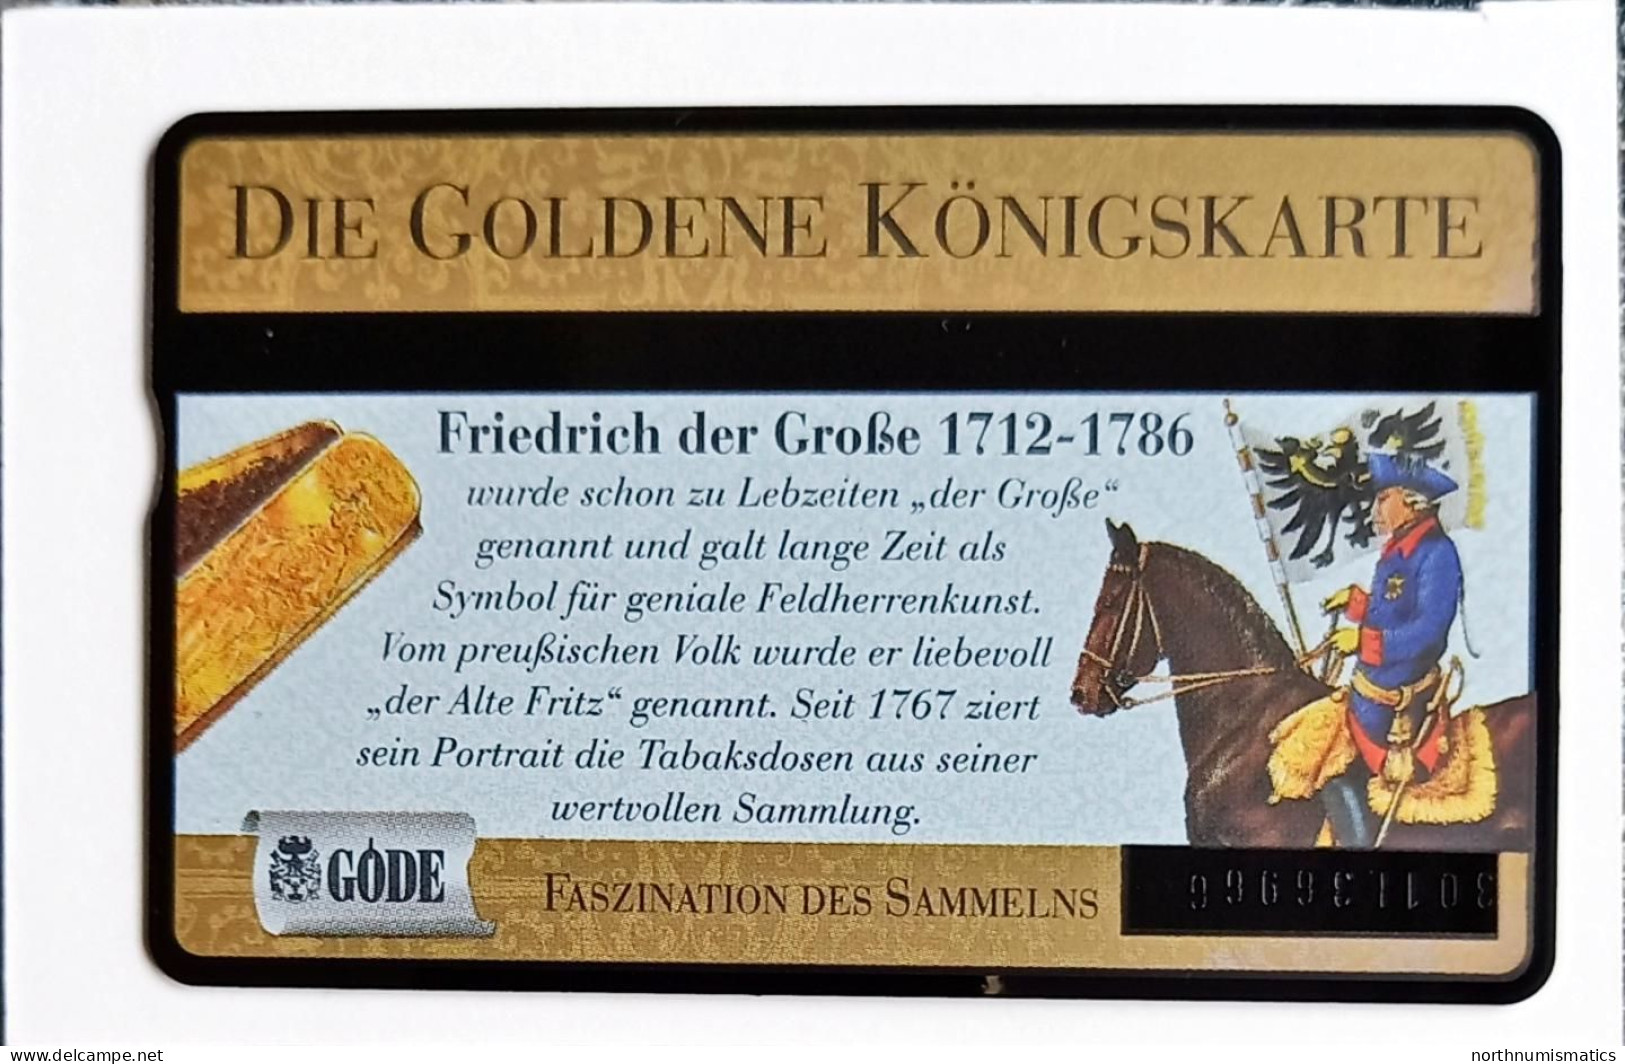 Swiss PTT Taxcard 5  Der ''Alte Fritz'' Gode 301L36966 Mint - Lots - Collections